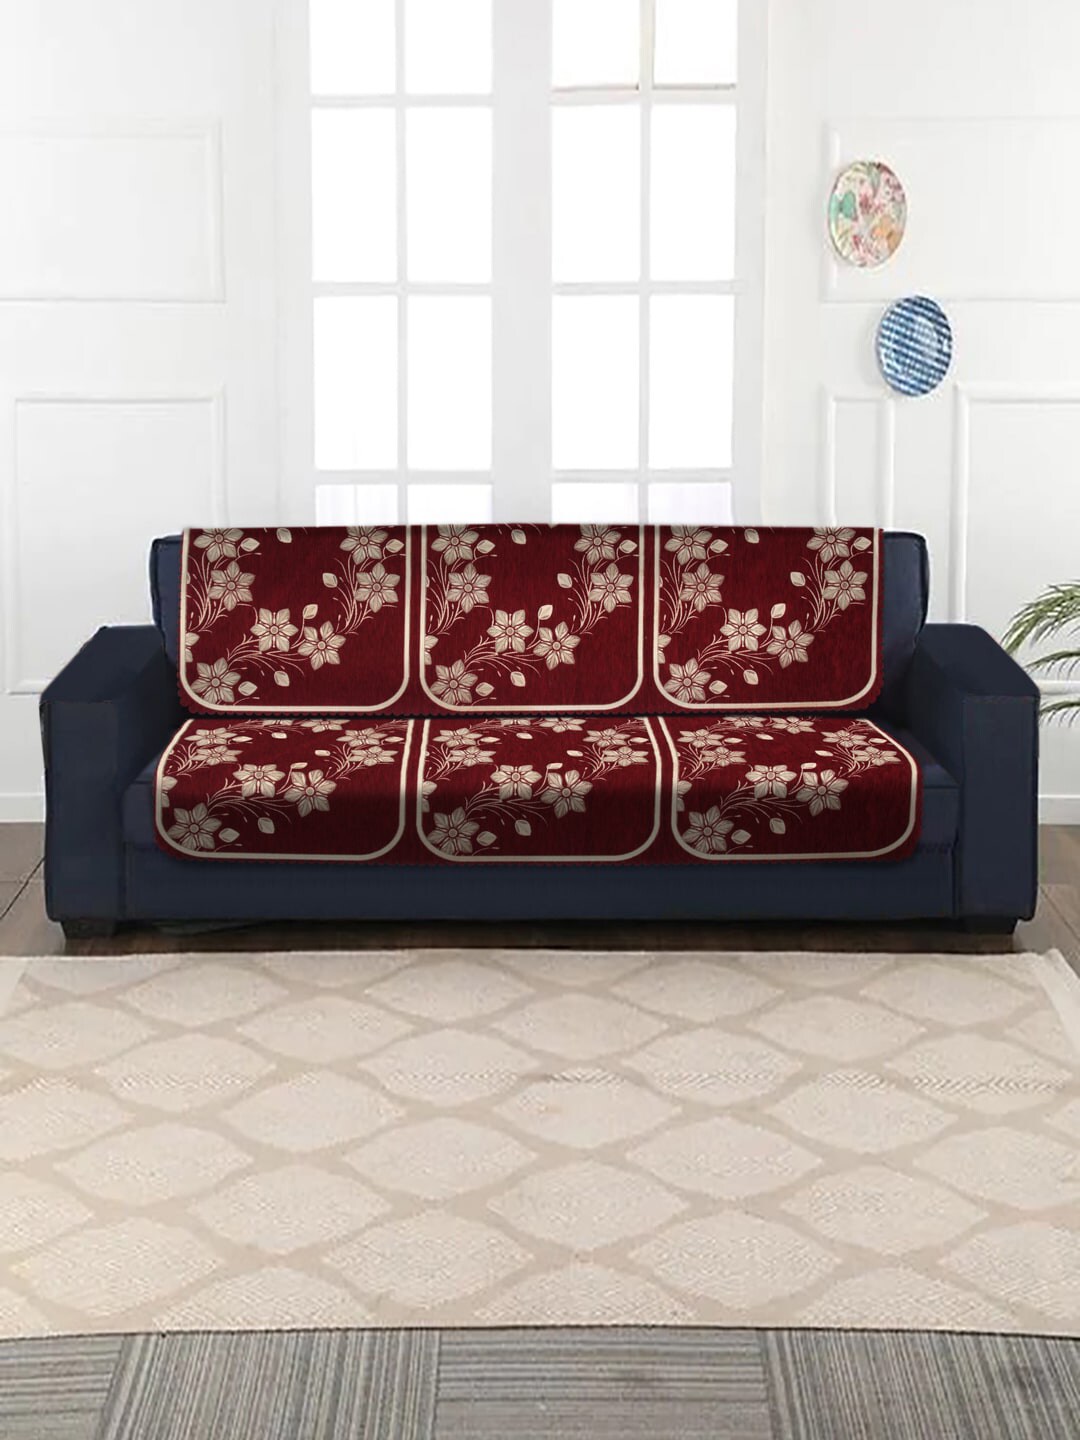 HOSTA HOMES Maroon & Beige Floral Jacquard Velvet 5 Seater Sofa Cover Price in India